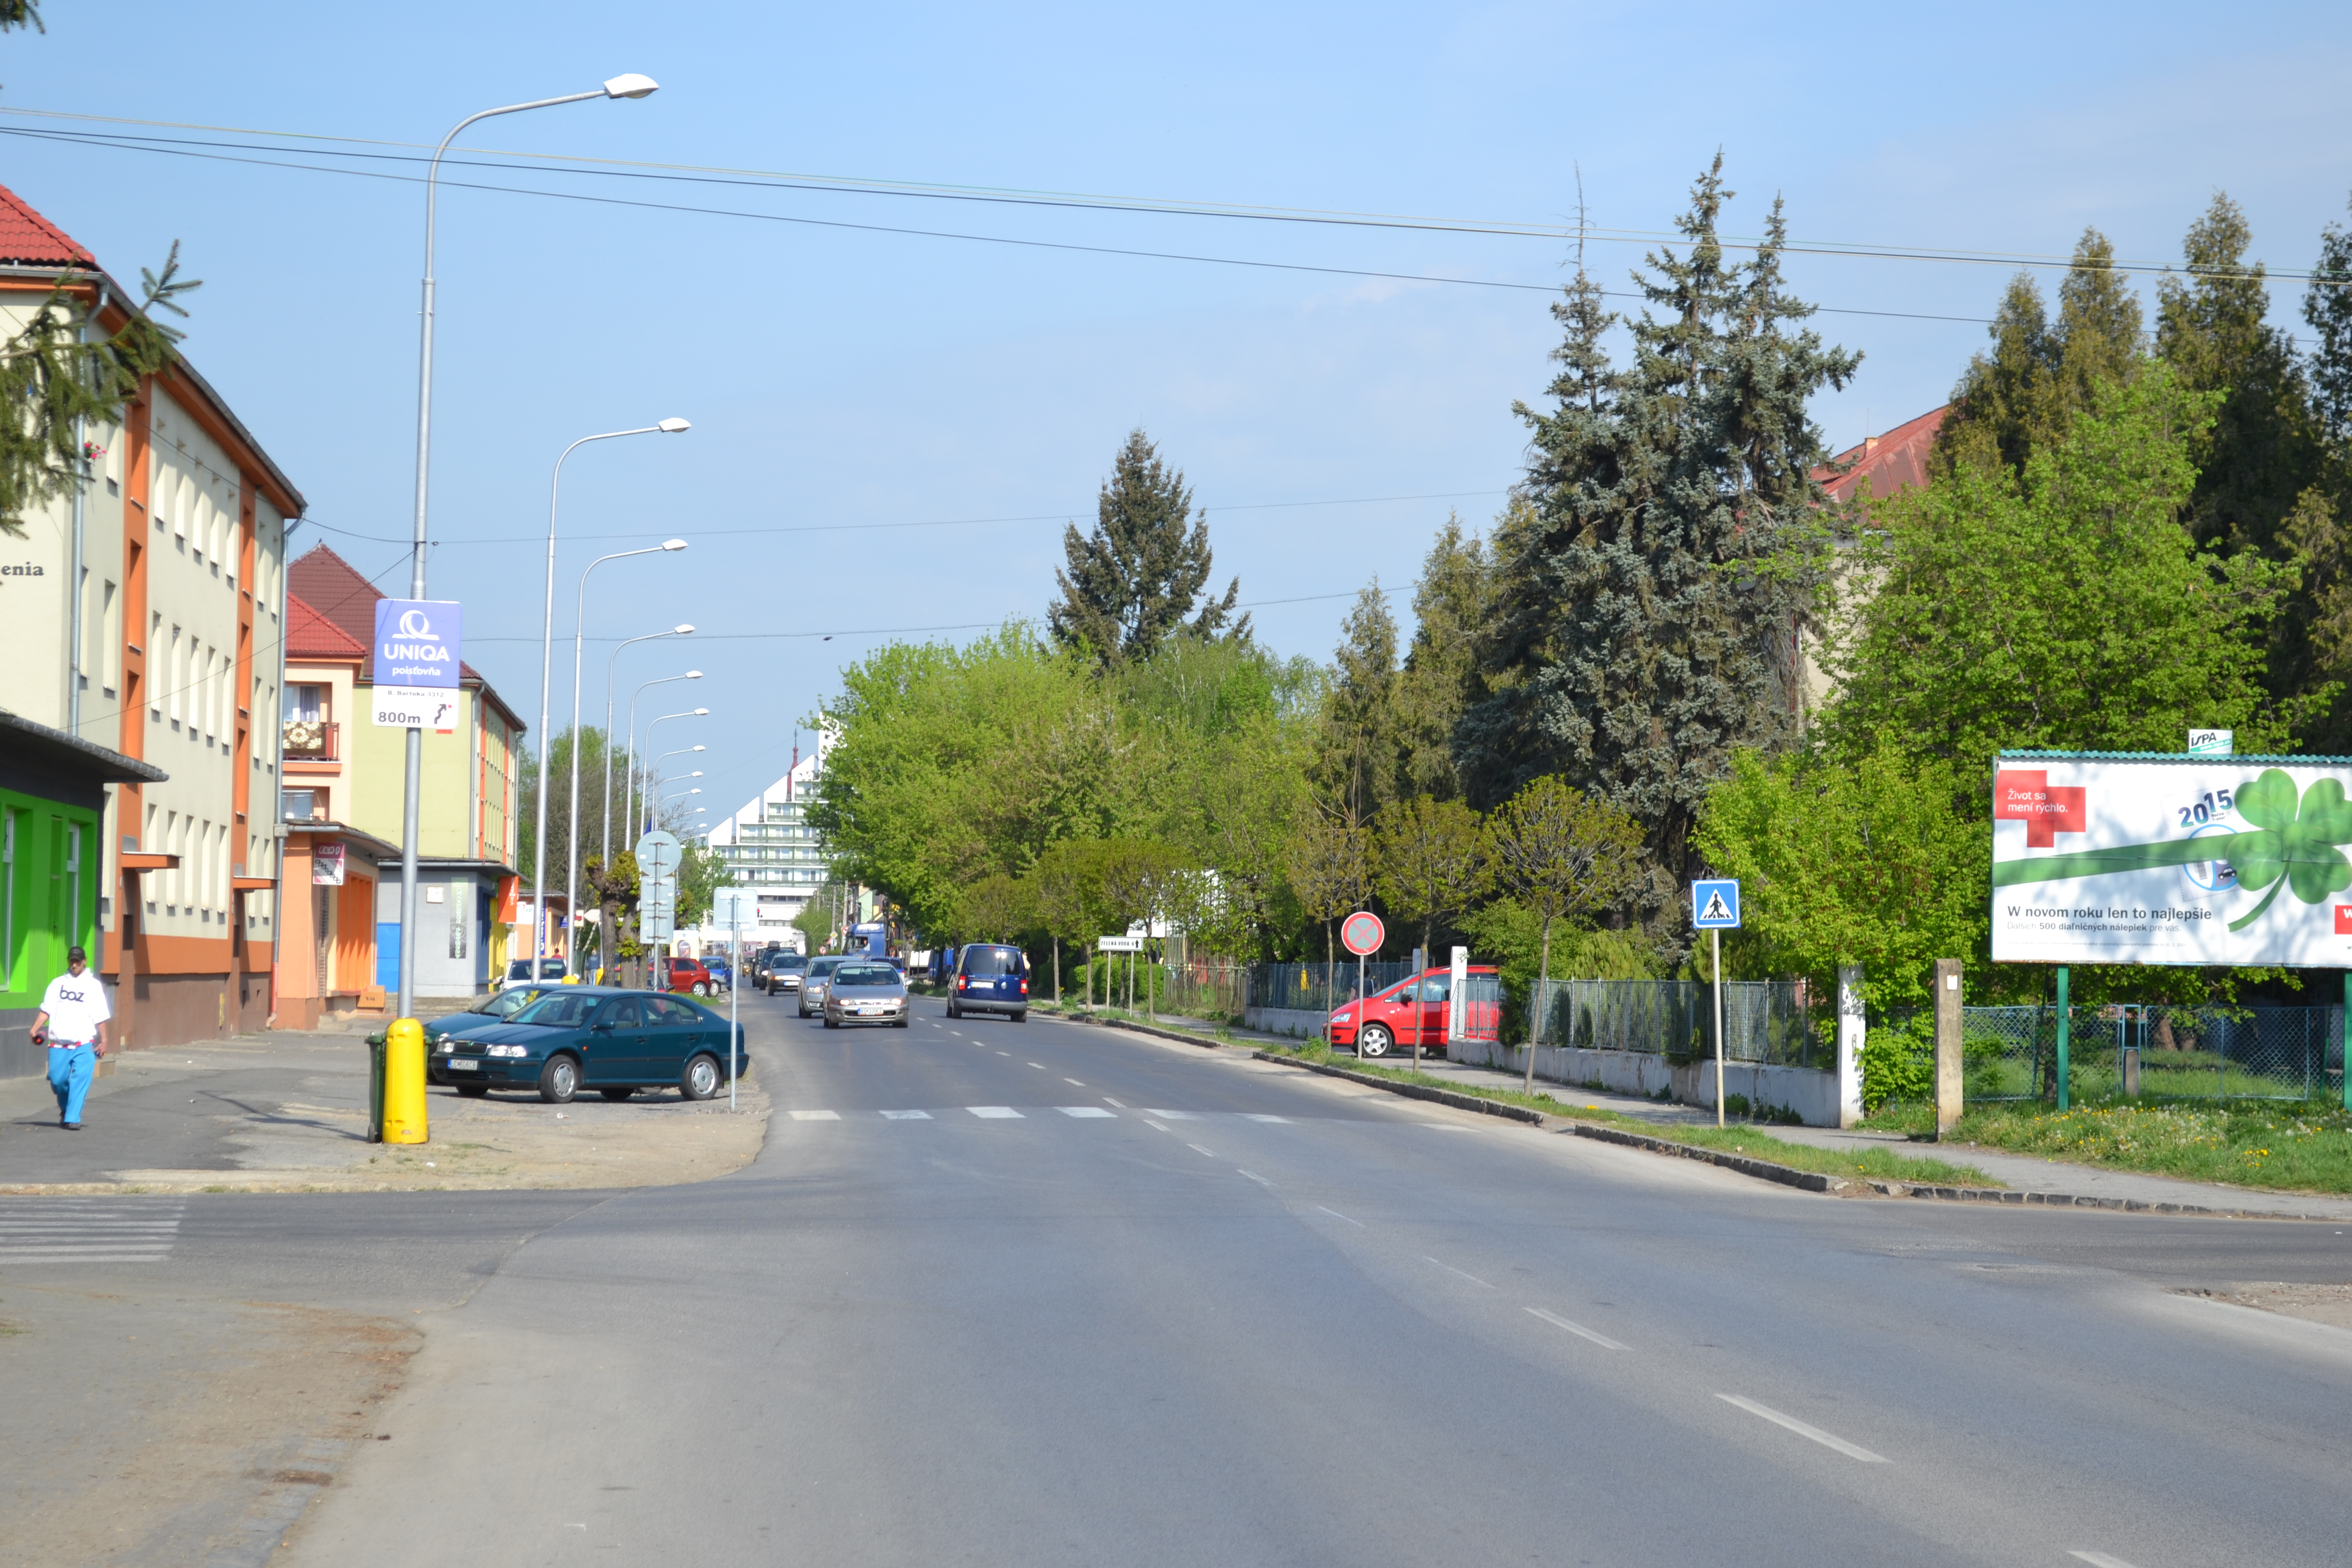 File:Murska Sobota, view of Slovenska ulica.jpg - Wikimedia Commons